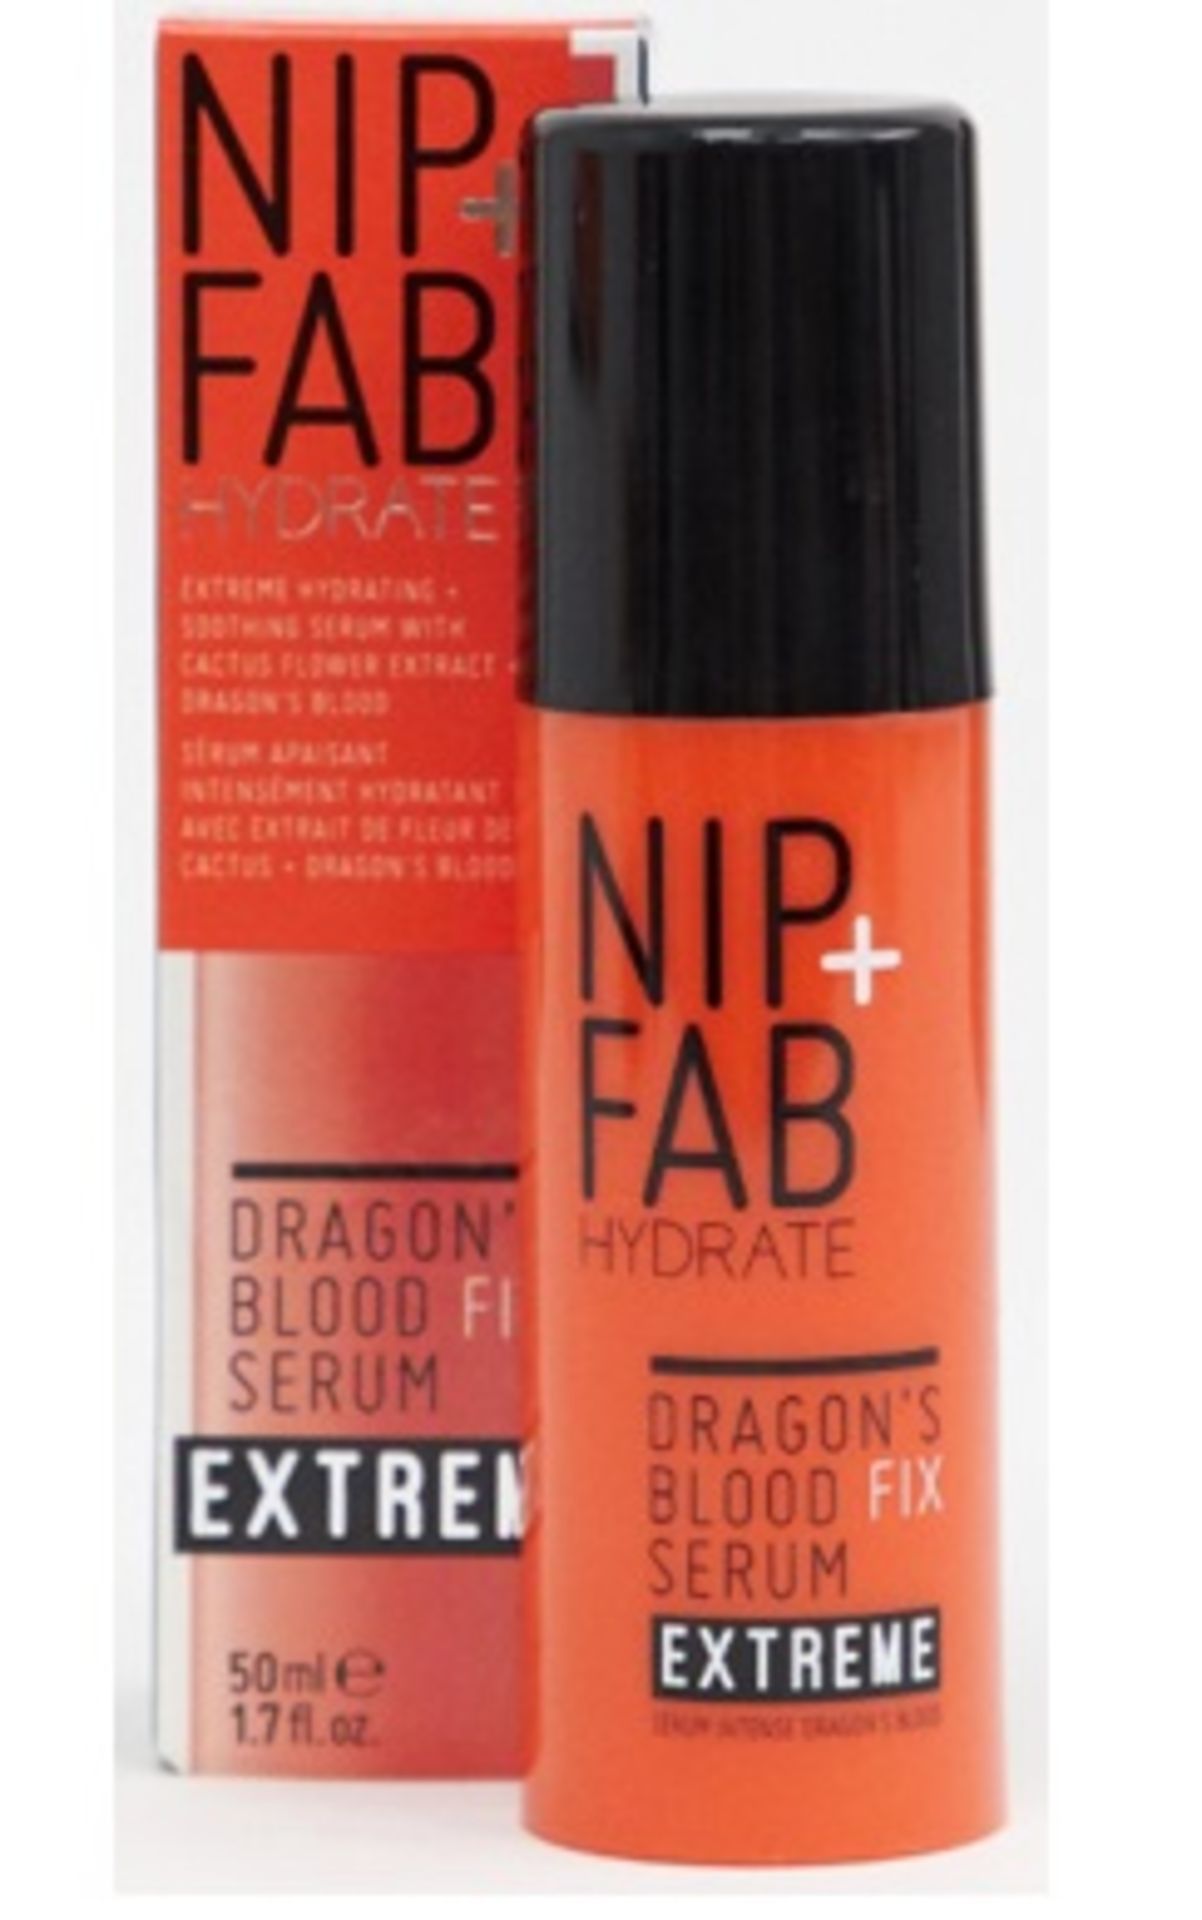 Box of 60 x Nip+Fab Dragons Blood Extreme Serum 50ml - RRP £300